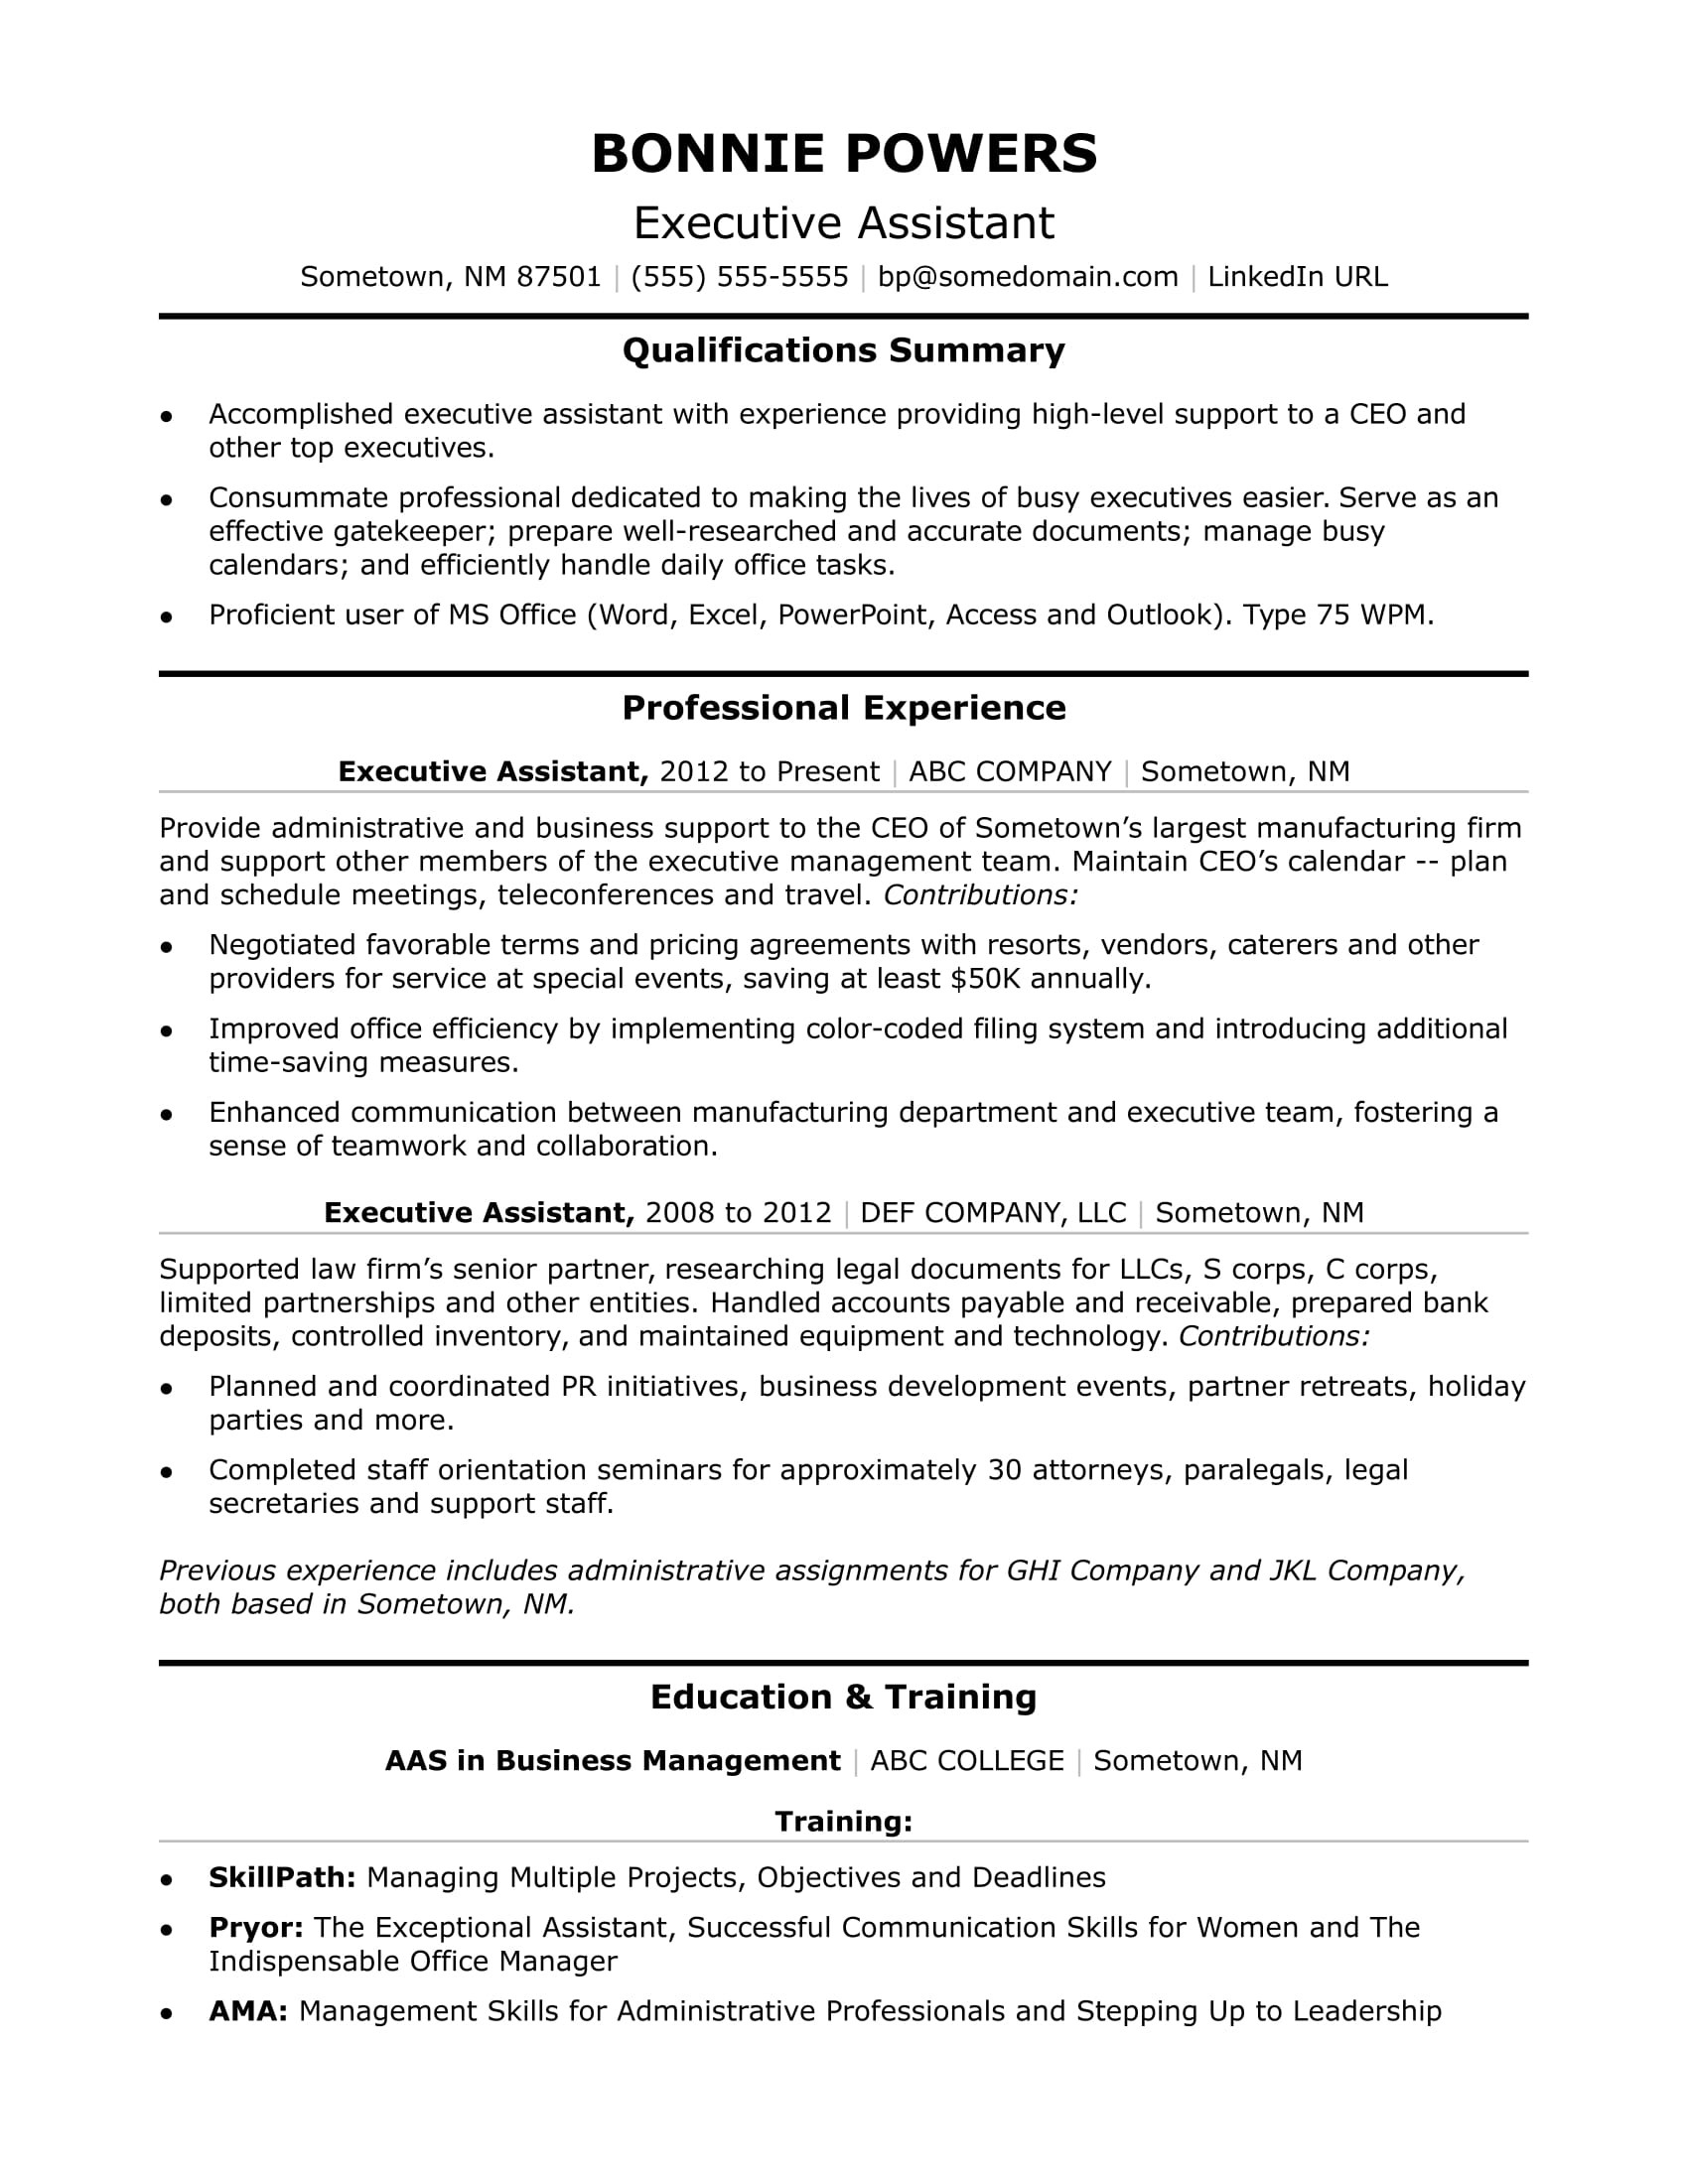 Sample Resume Profile for Administrative assistant Executive Administrative assistant Resume Sample Monster.com